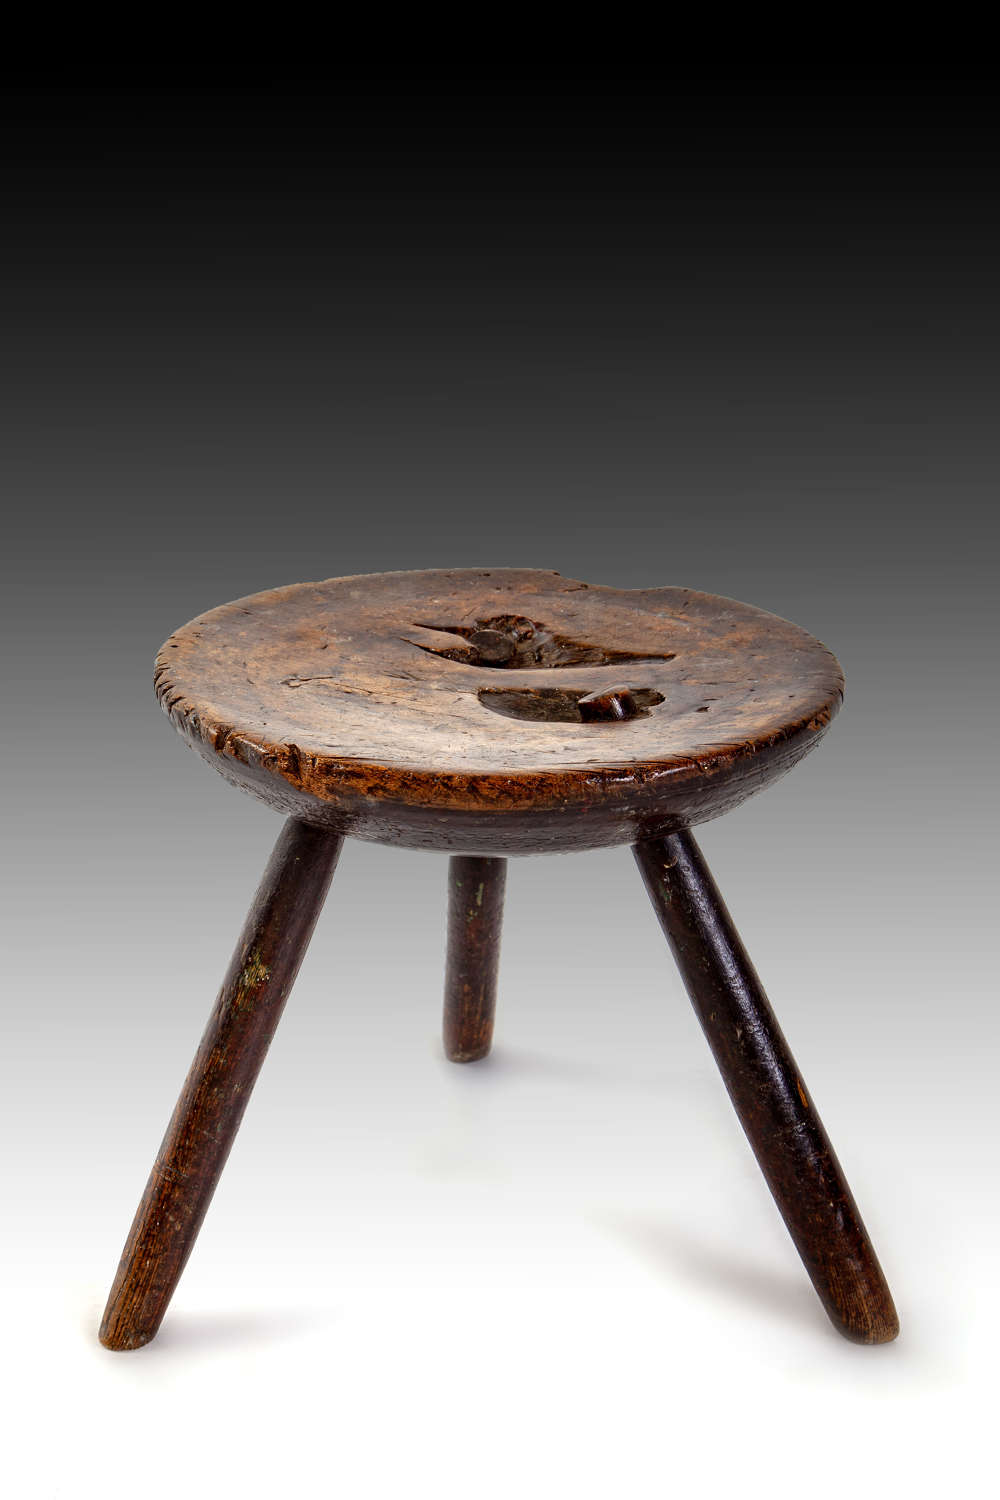 A 19th century ash dairy stool